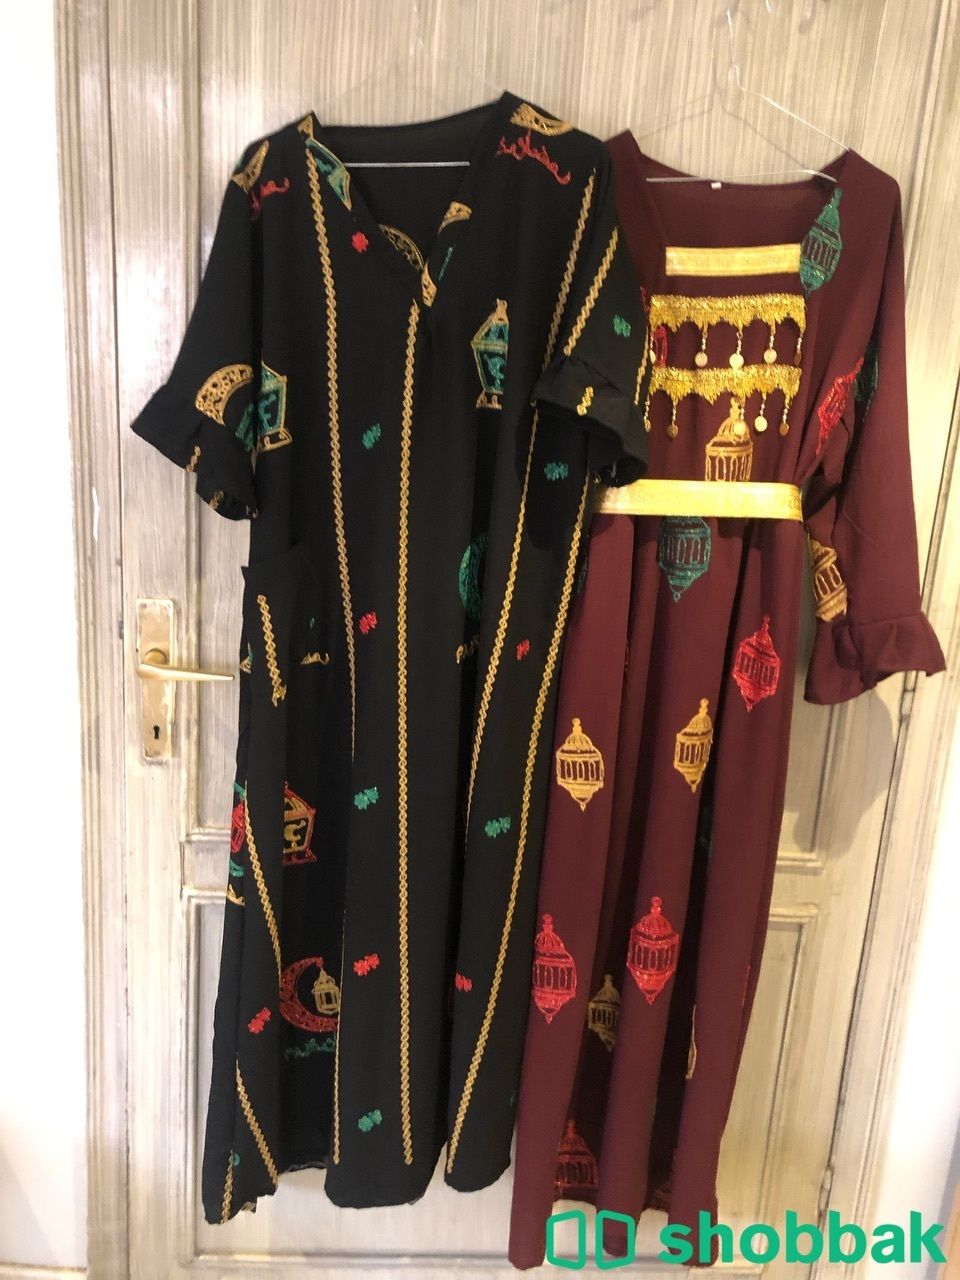 فستان رمضاني او للعيد Shobbak Saudi Arabia